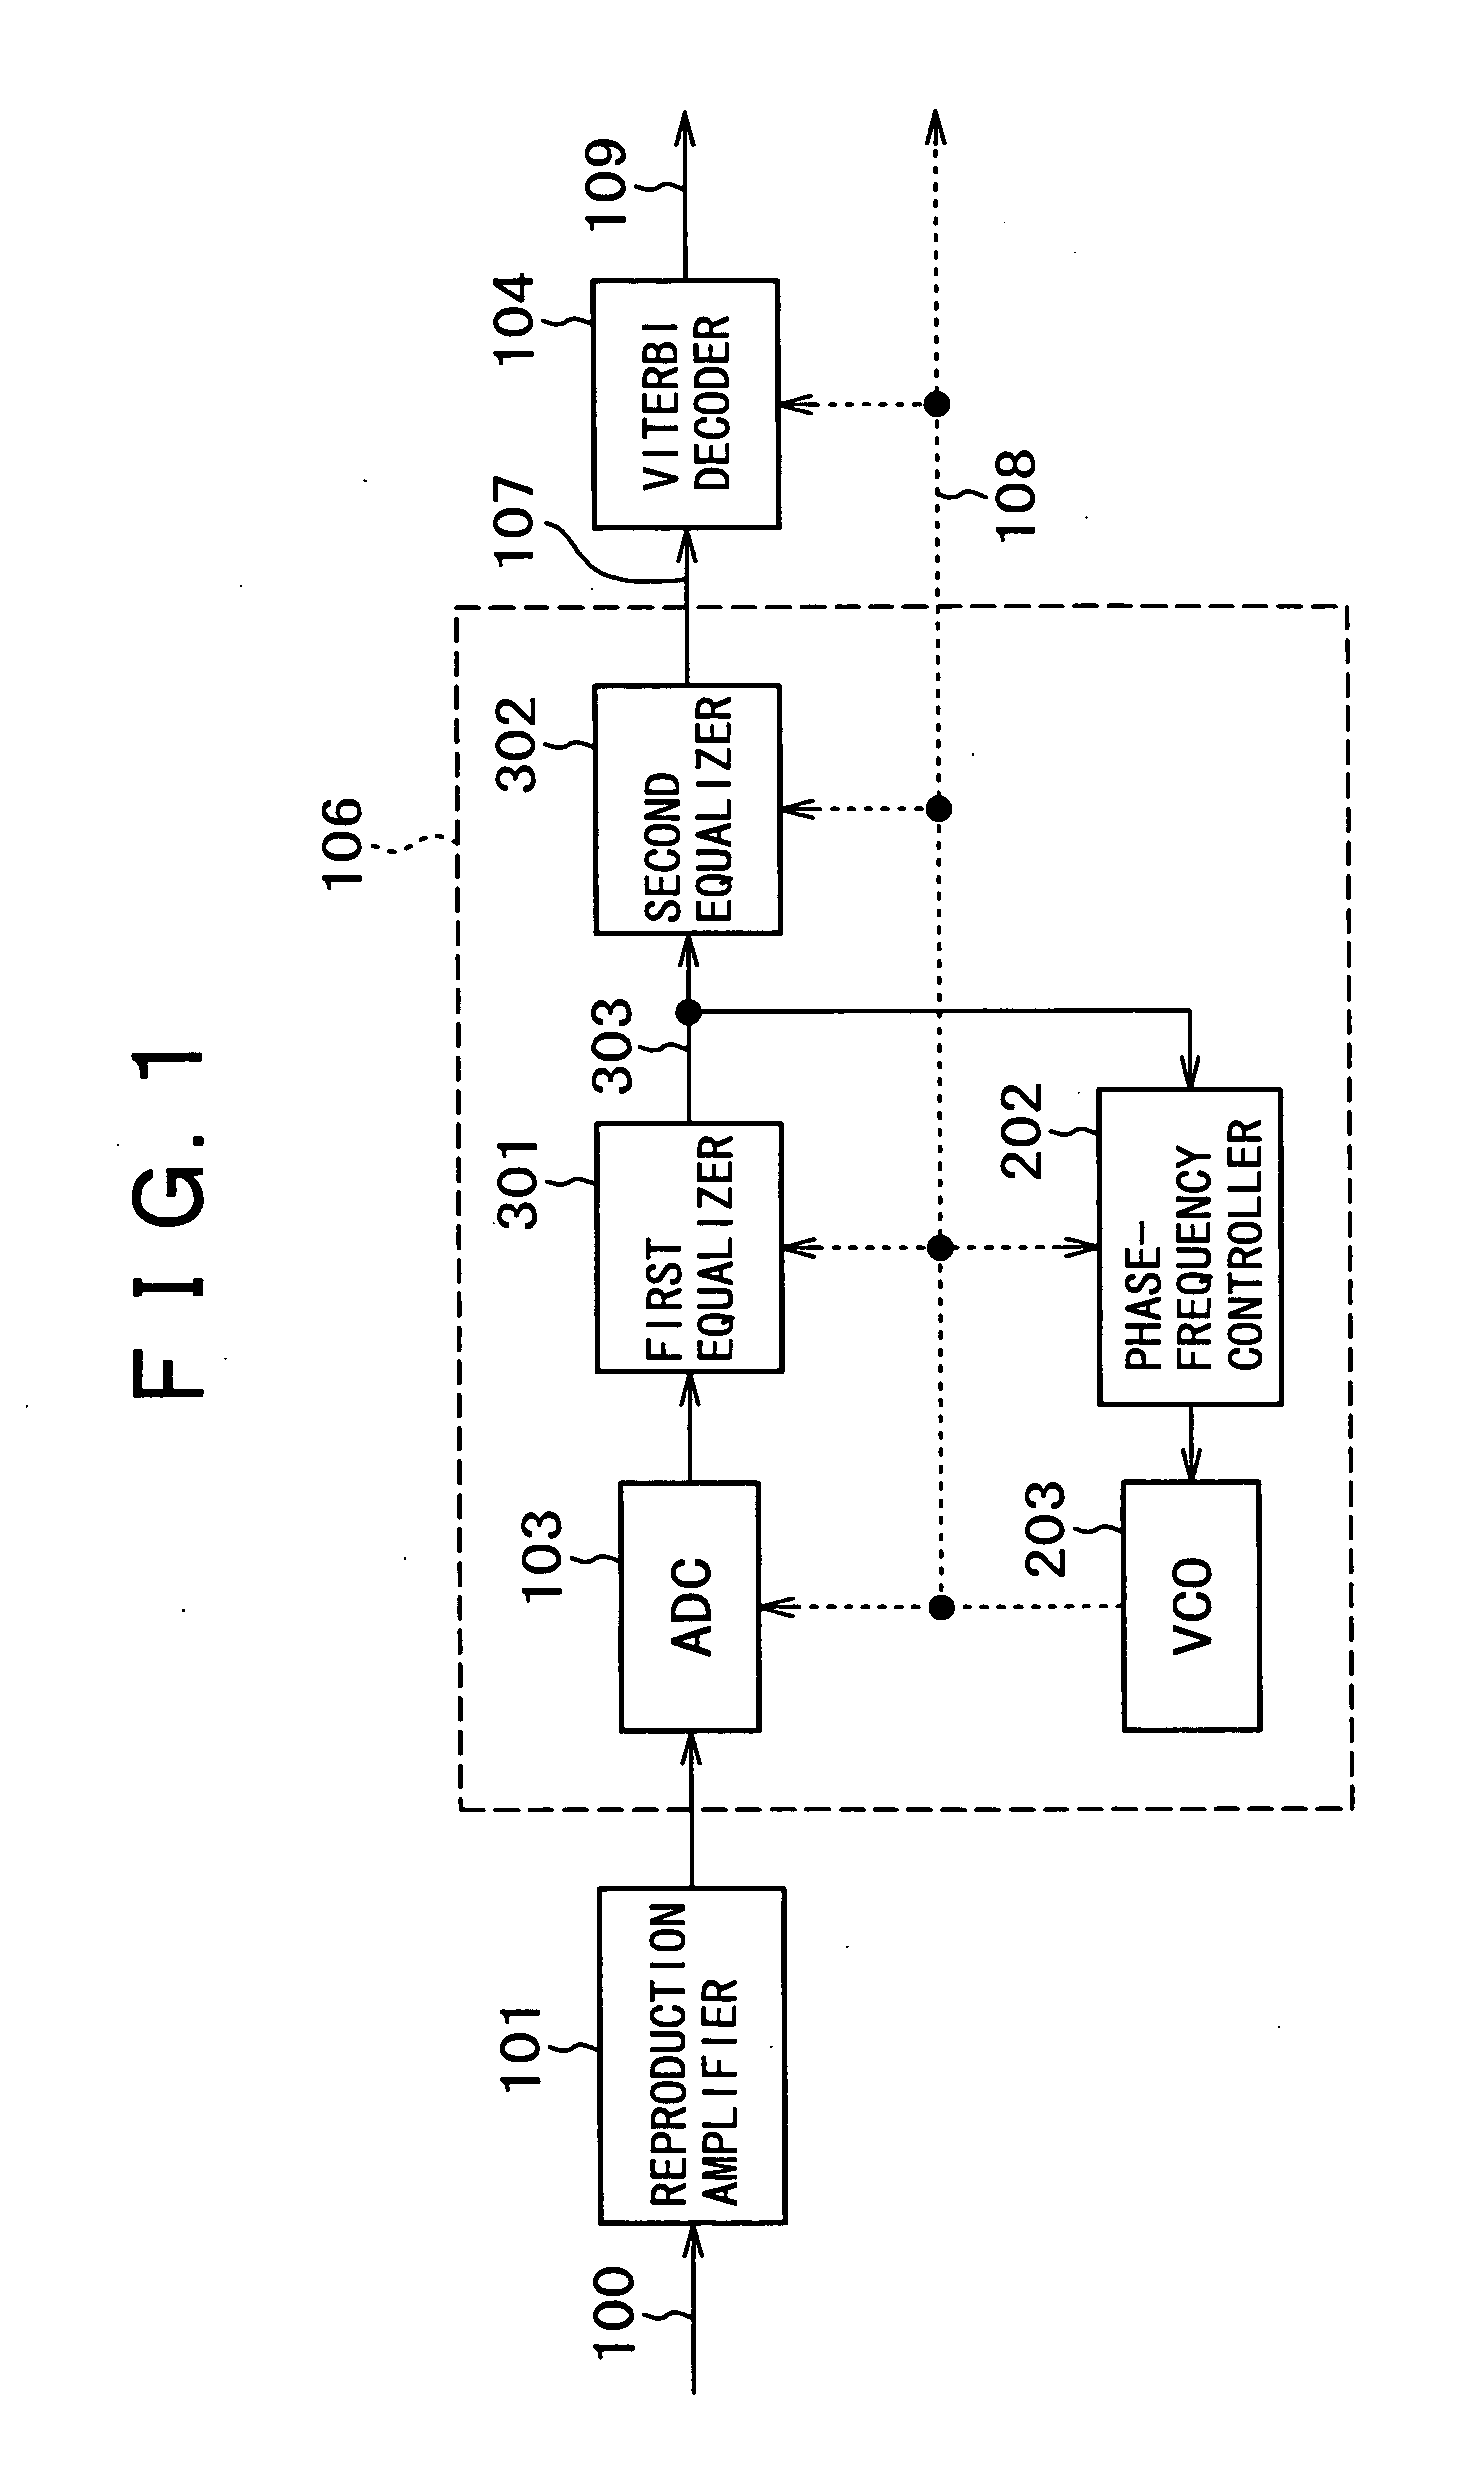 Reproduced signal waveform processing apparatus